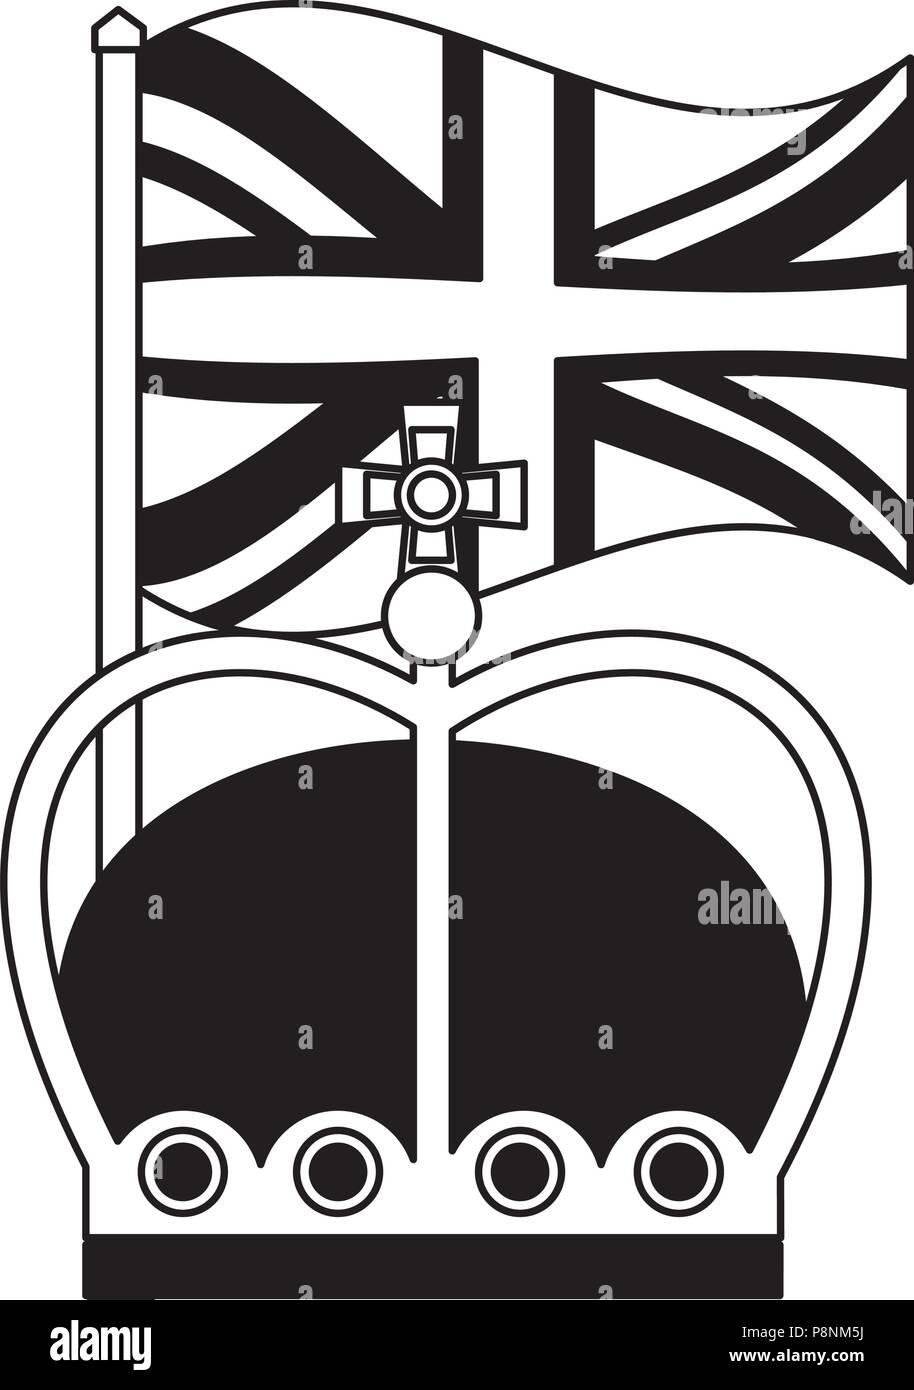 united kingdom flag royalty crown vector illustration black and white ...